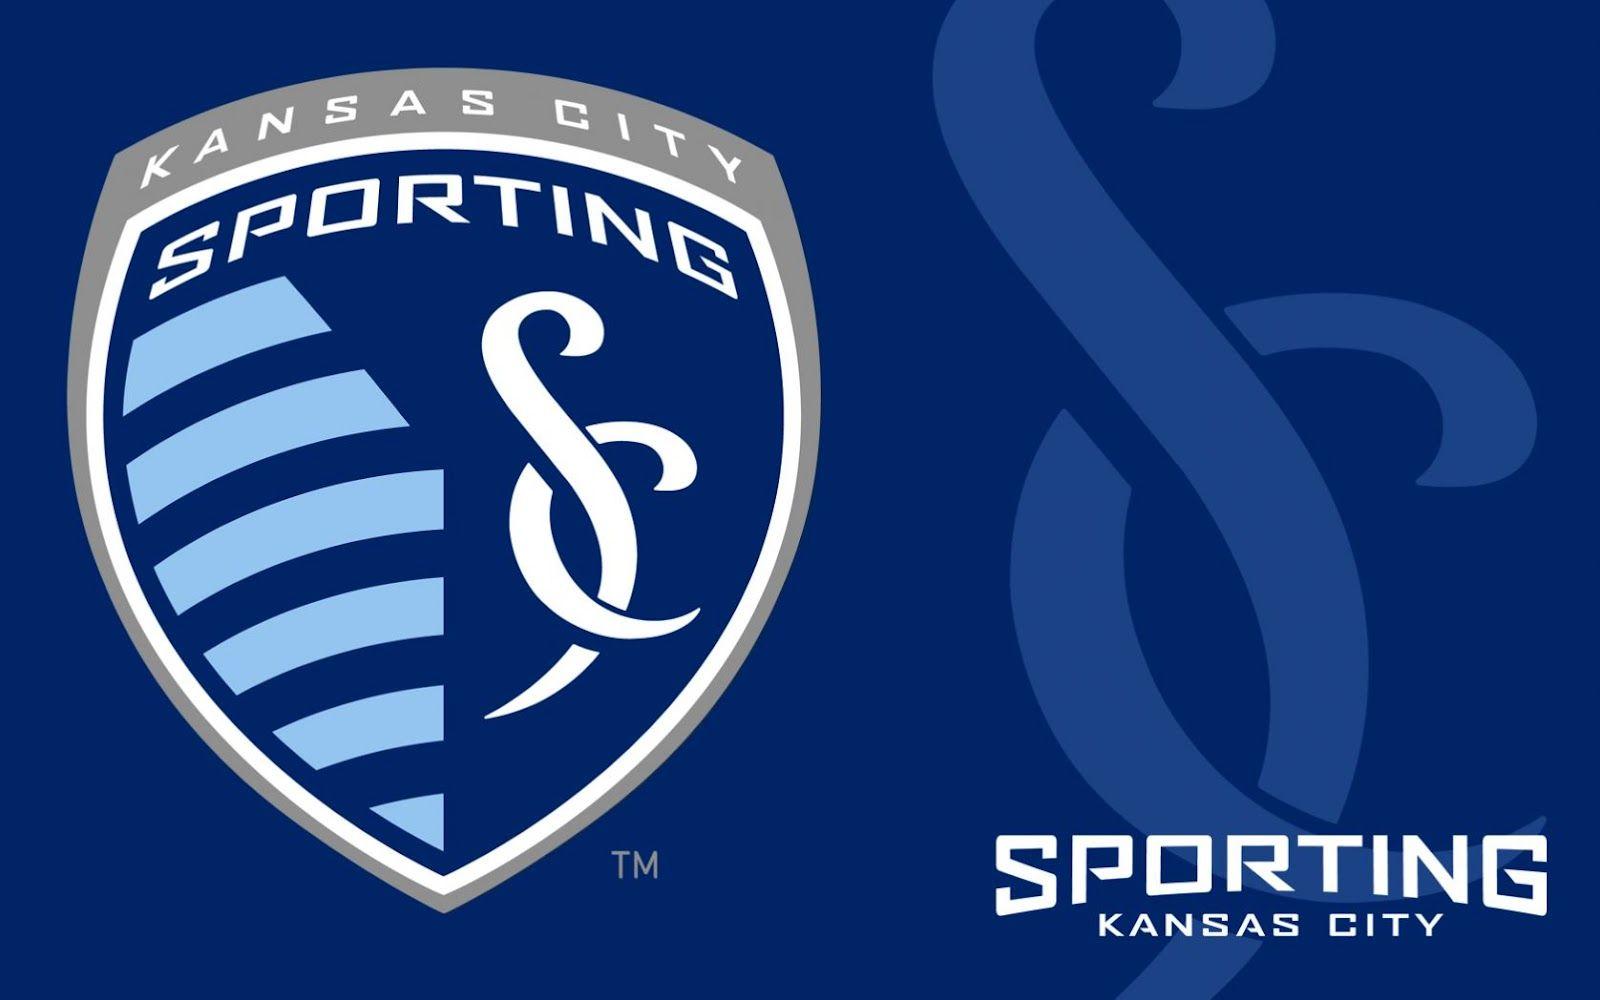 Sporting Kansas City Wallpaper. Sporting Kansas City is an American